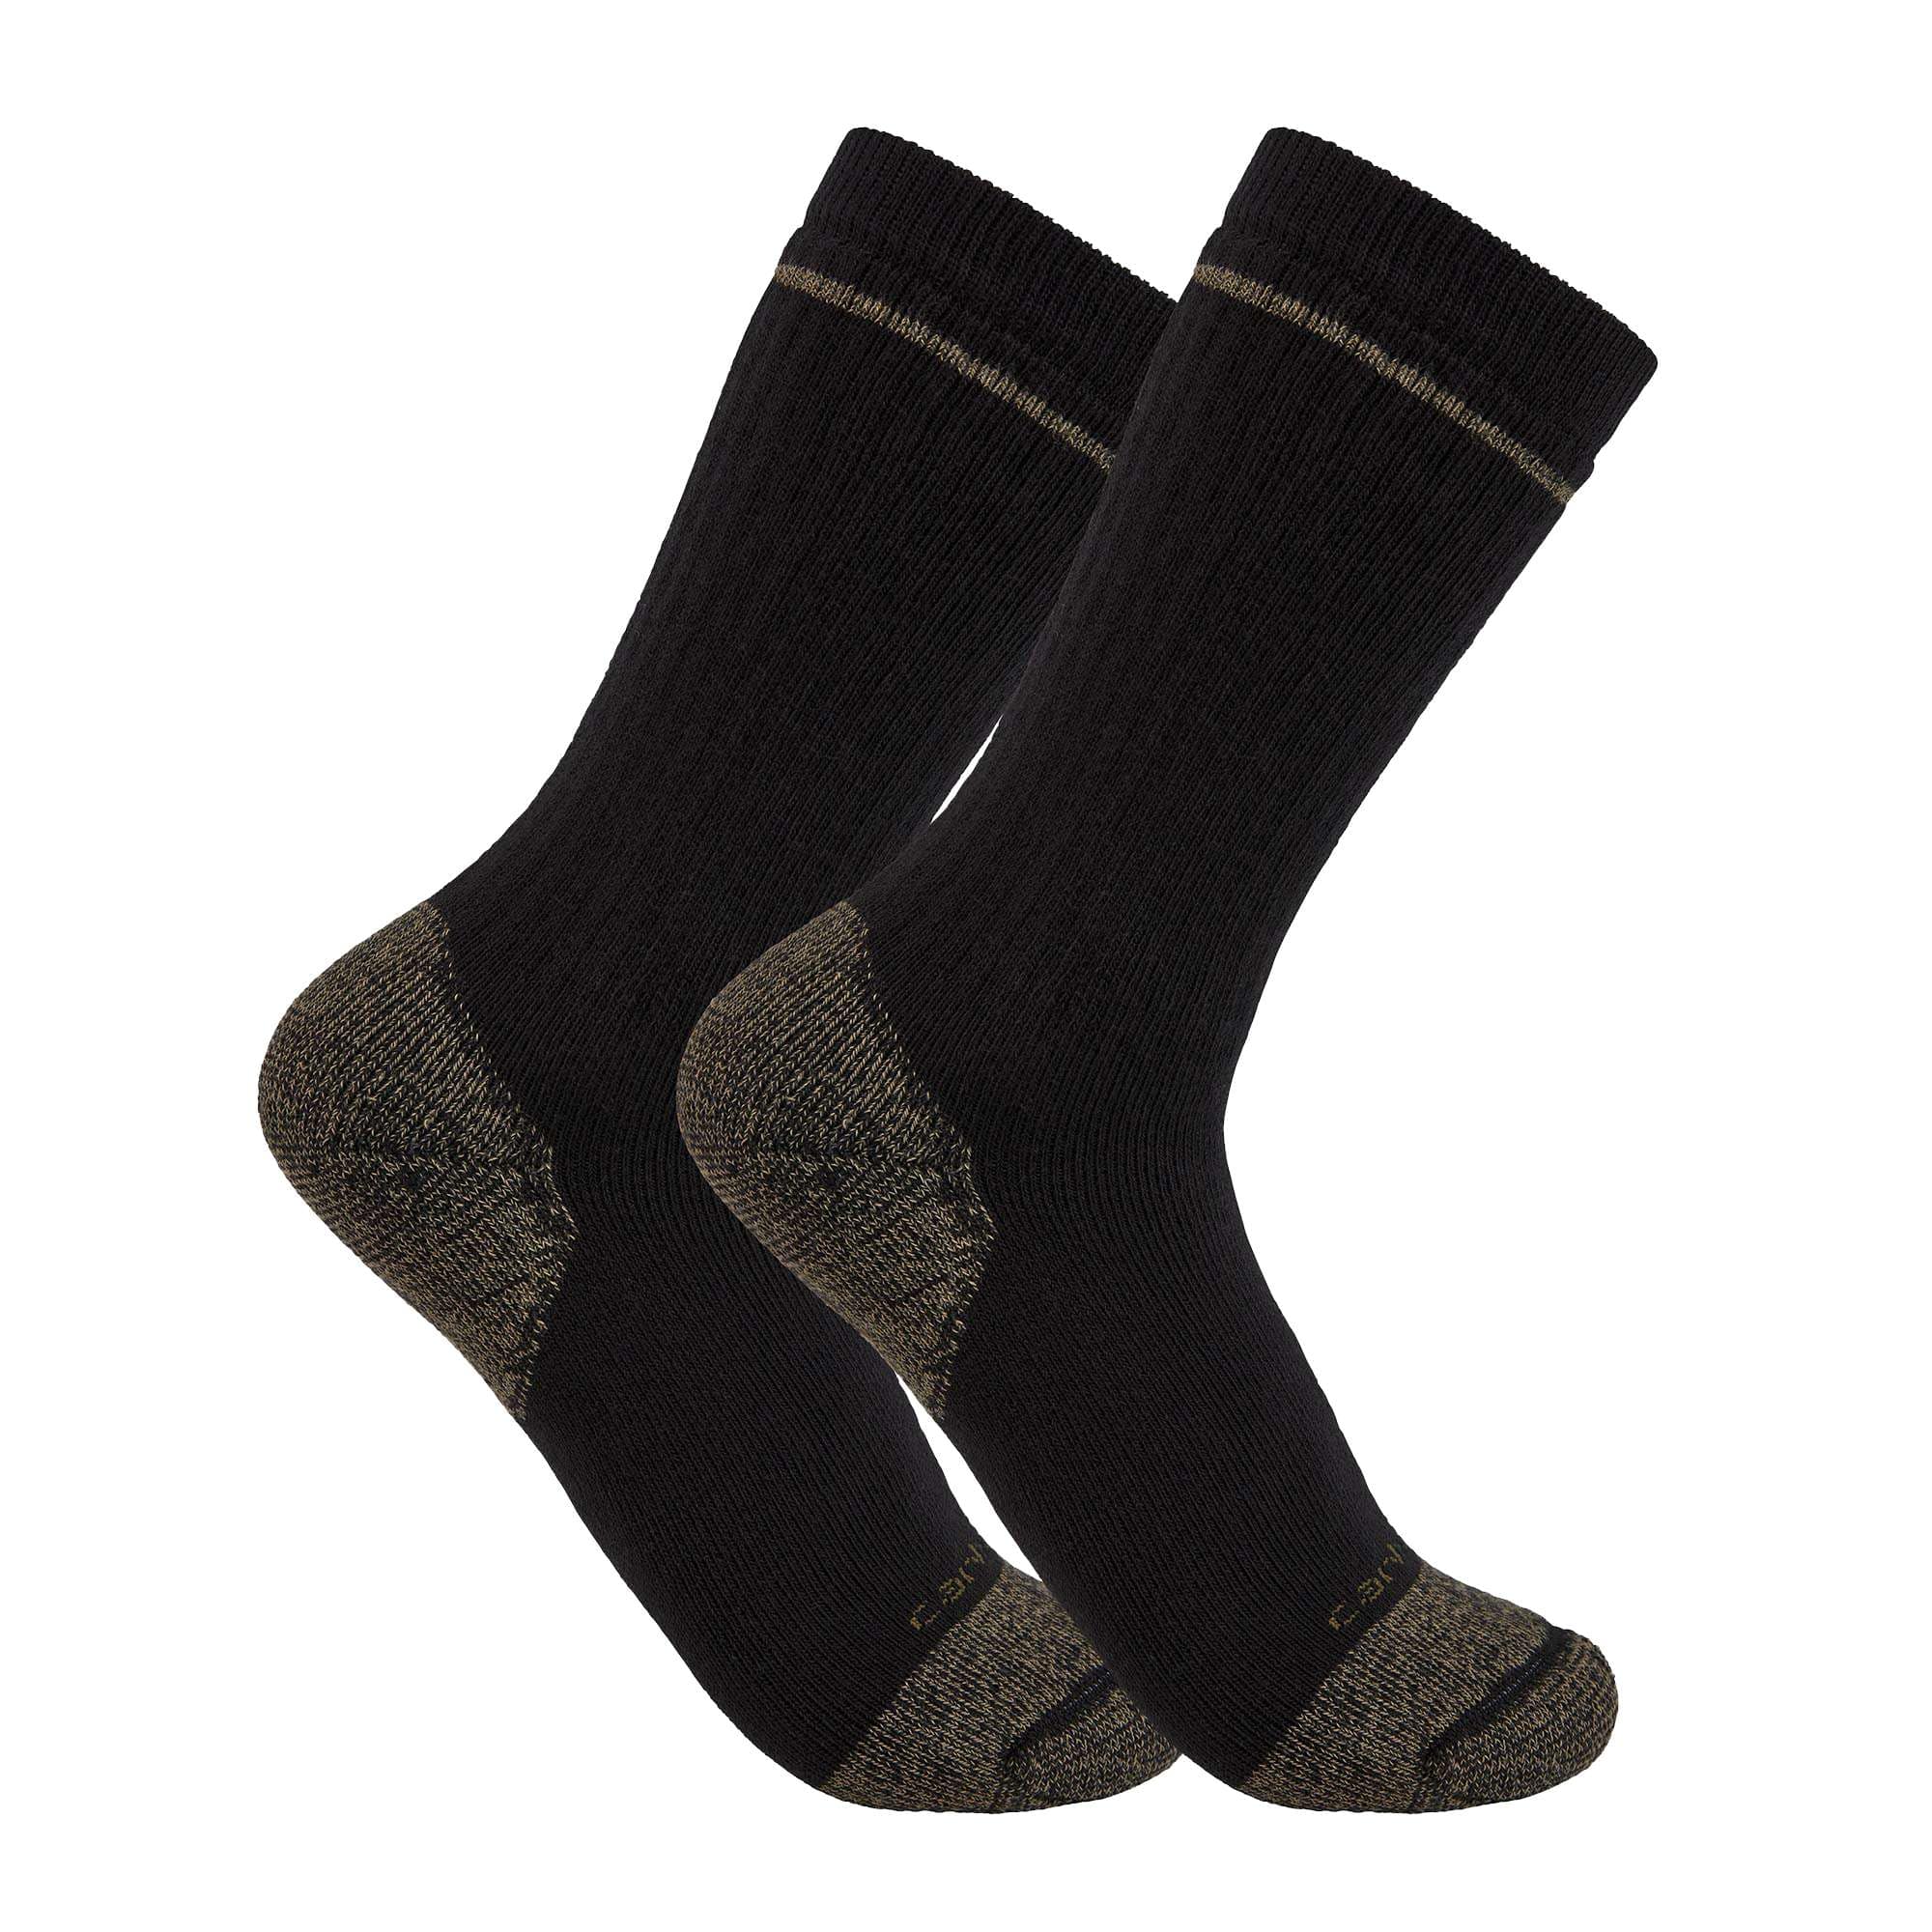 MIDWEIGHT COTTON BLEND STEEL TOE BOOT SOCK 2 PAIRS | Carhartt®